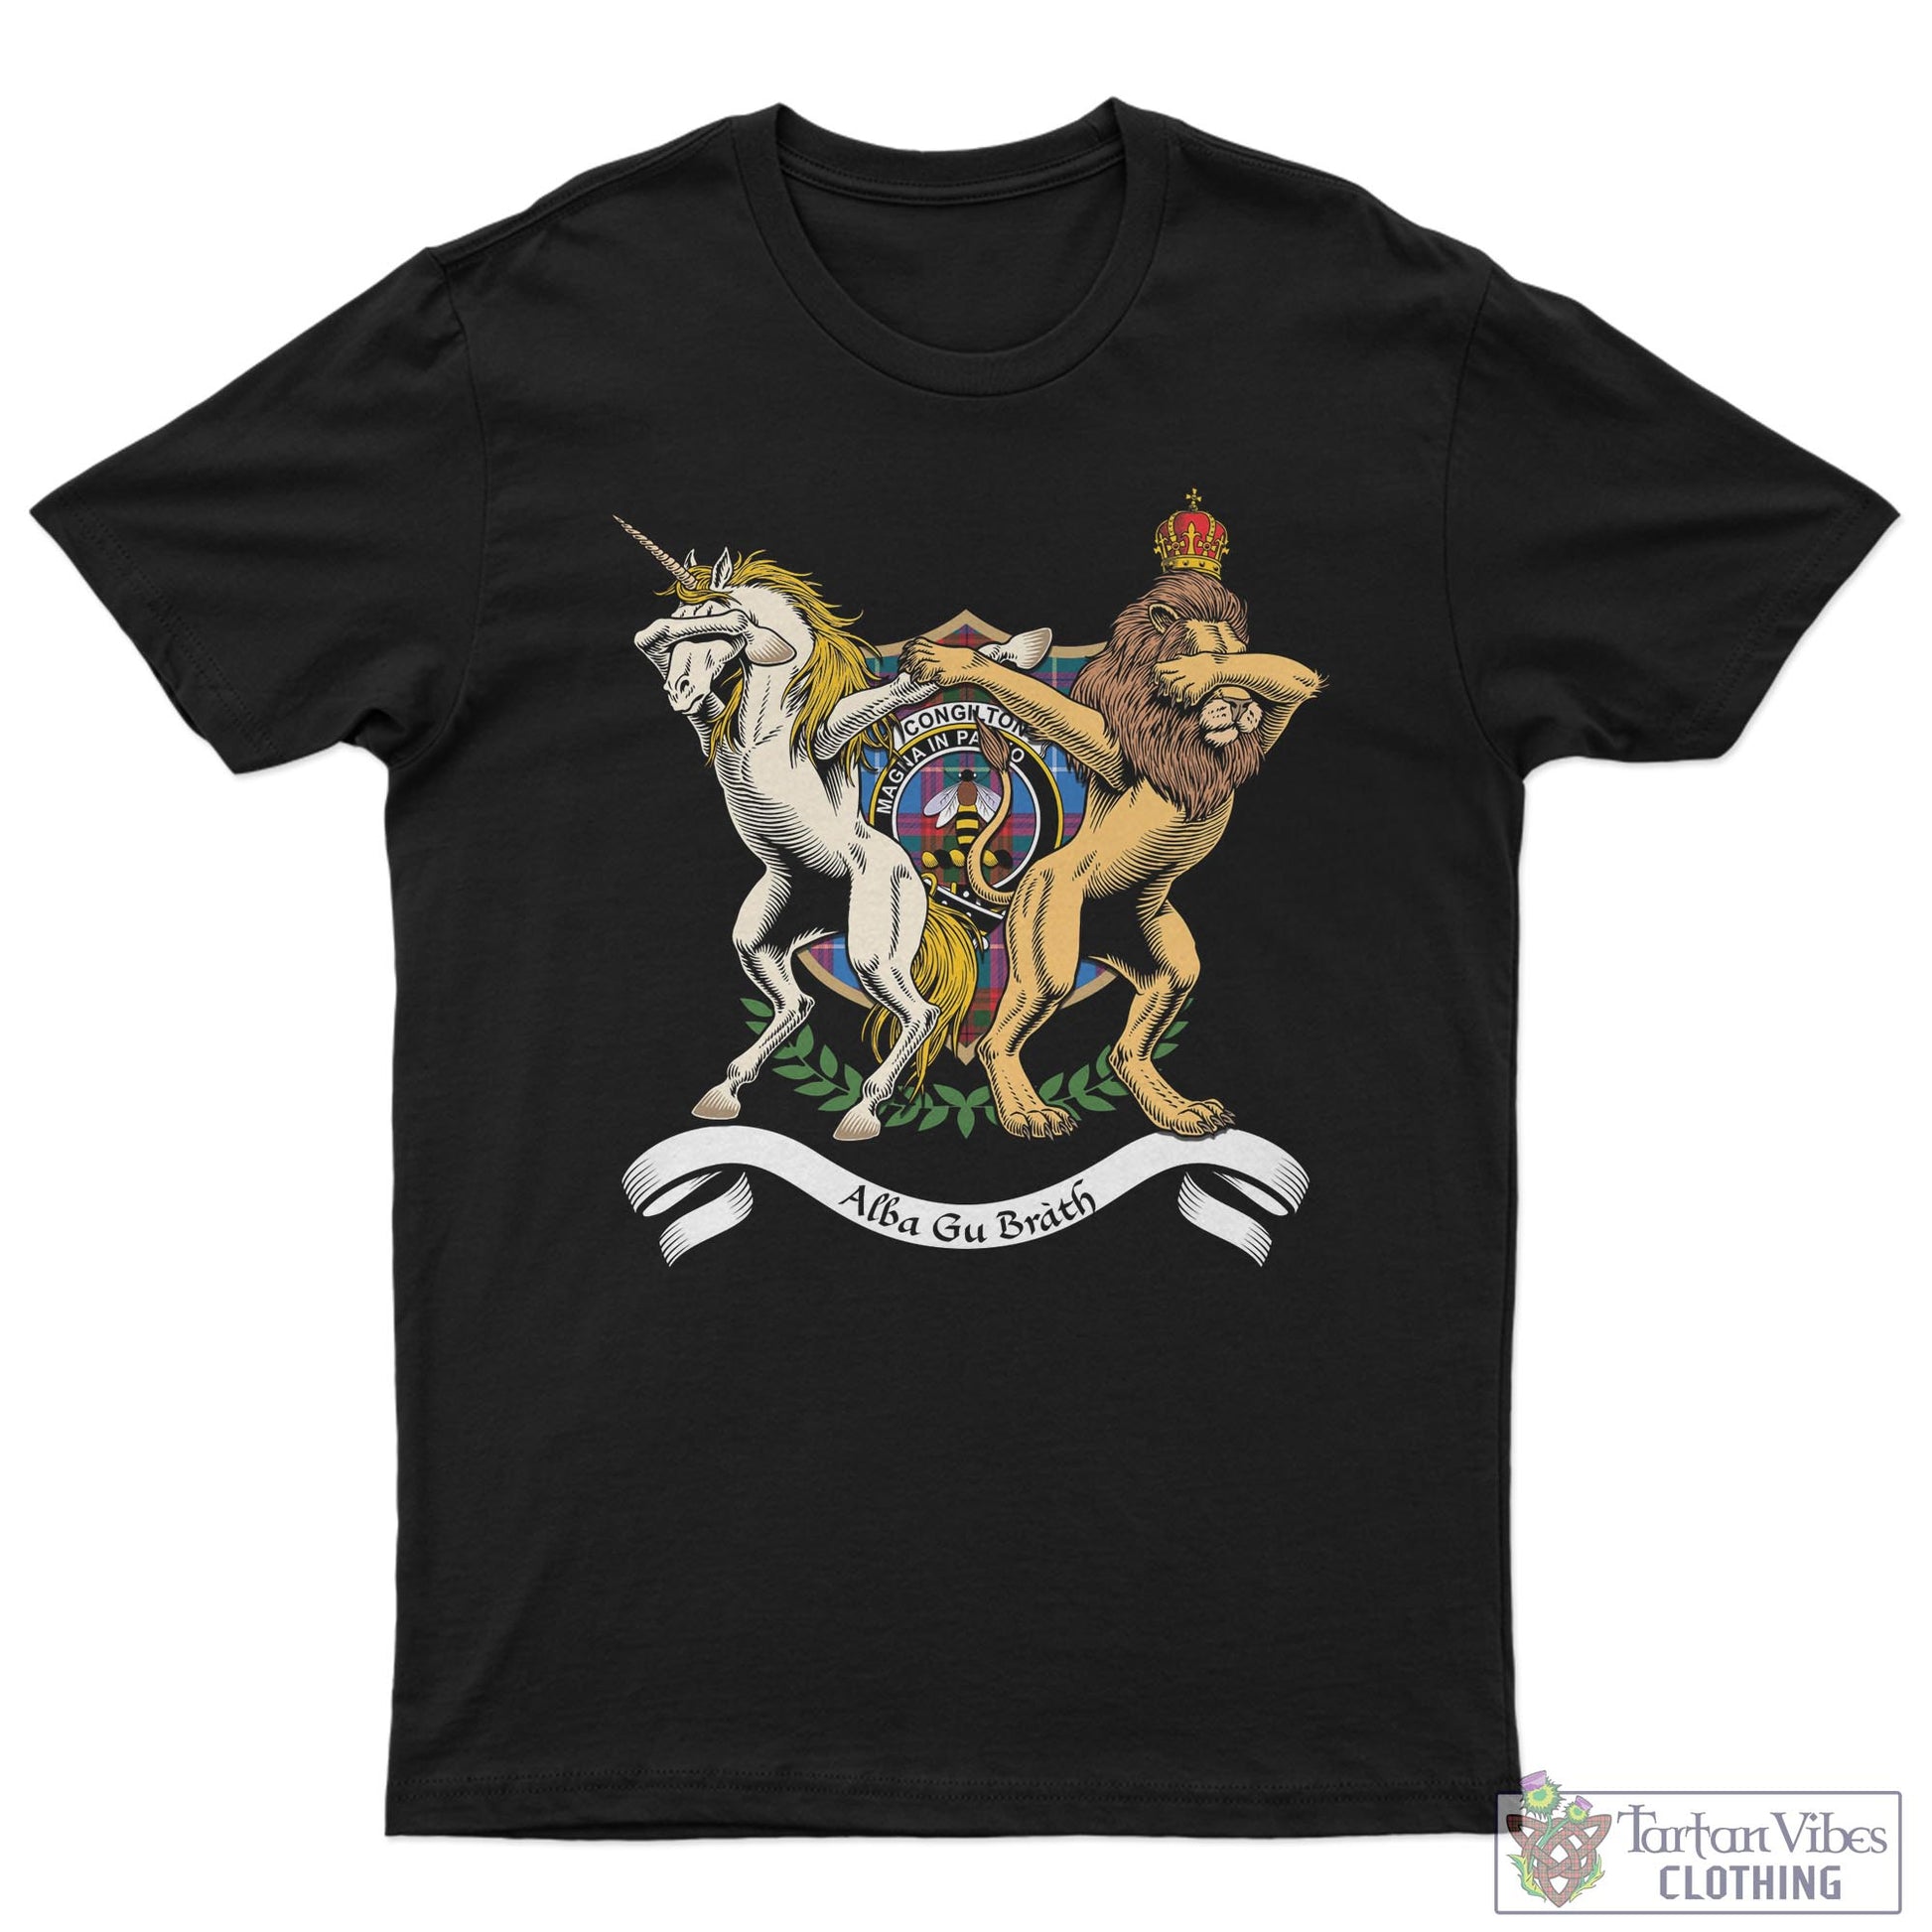 Tartan Vibes Clothing Congilton Family Crest Cotton Men's T-Shirt with Scotland Royal Coat Of Arm Funny Style